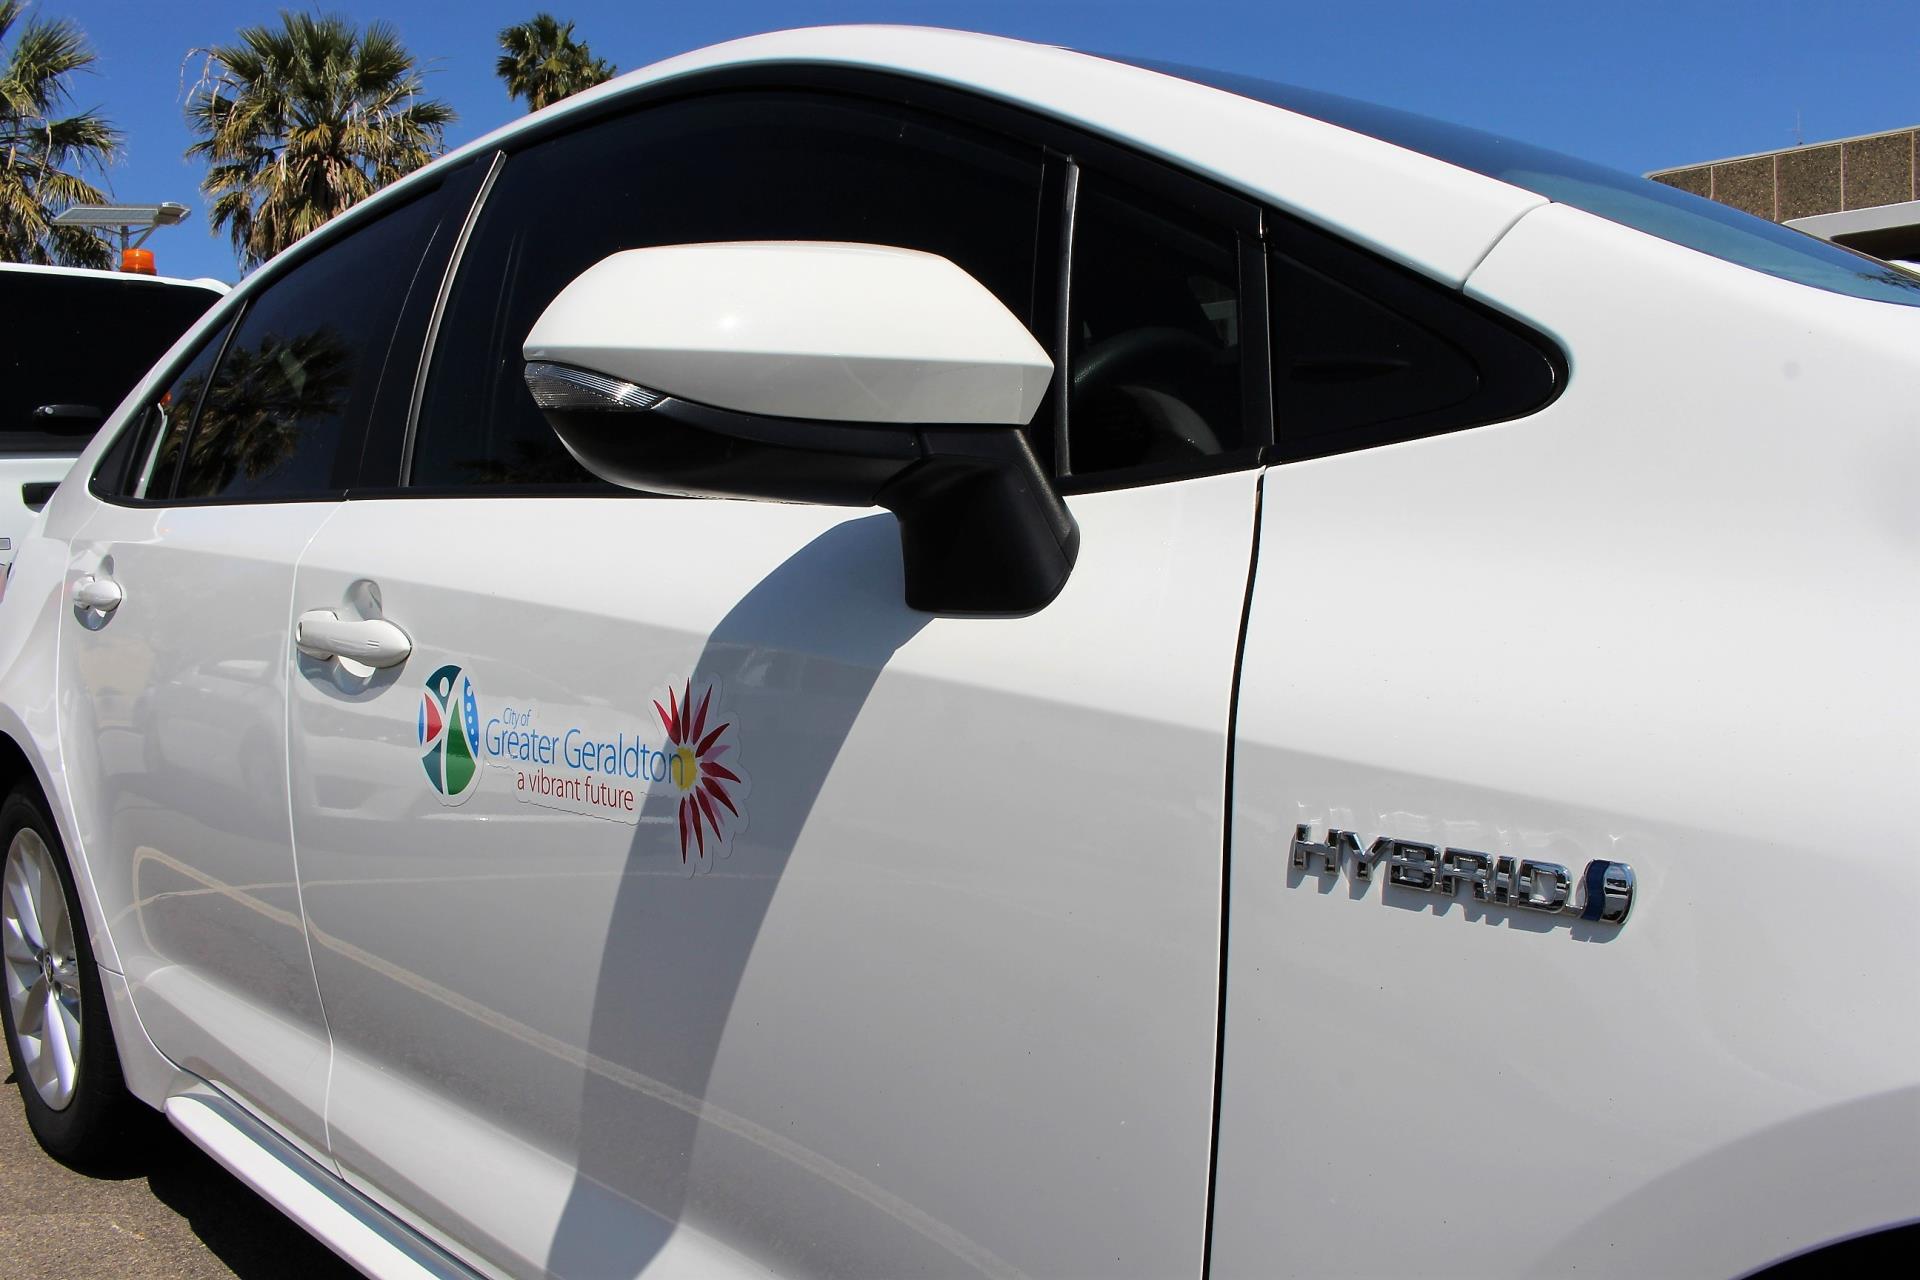 New hybrid vehicle addition to the City’s passenger fleet.